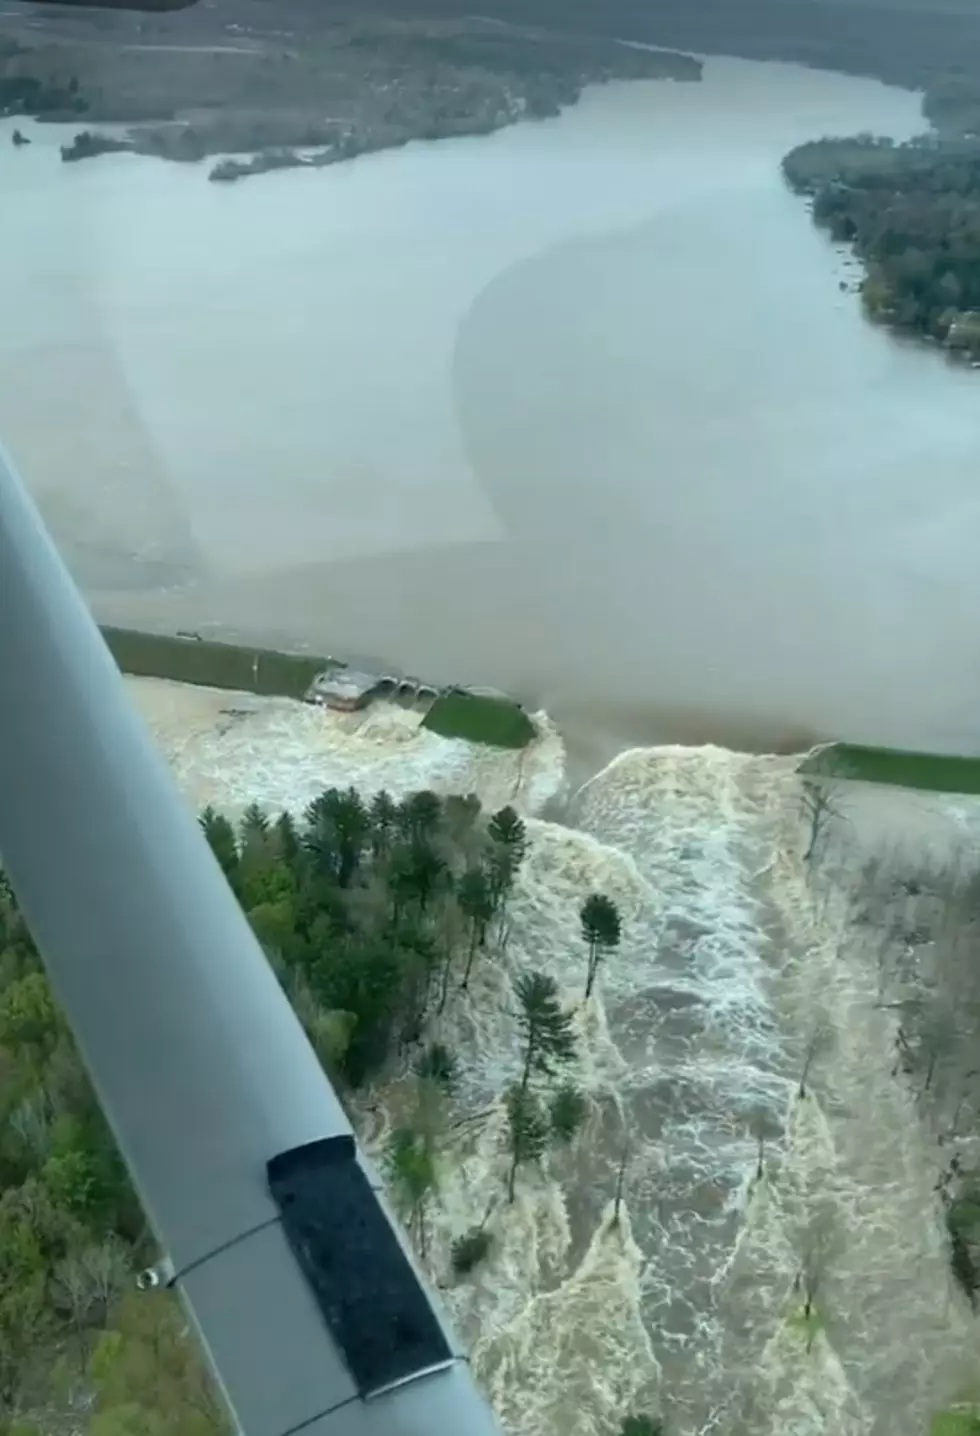 Edenville Dam Fails — Floods Mid-Michigan [Video]